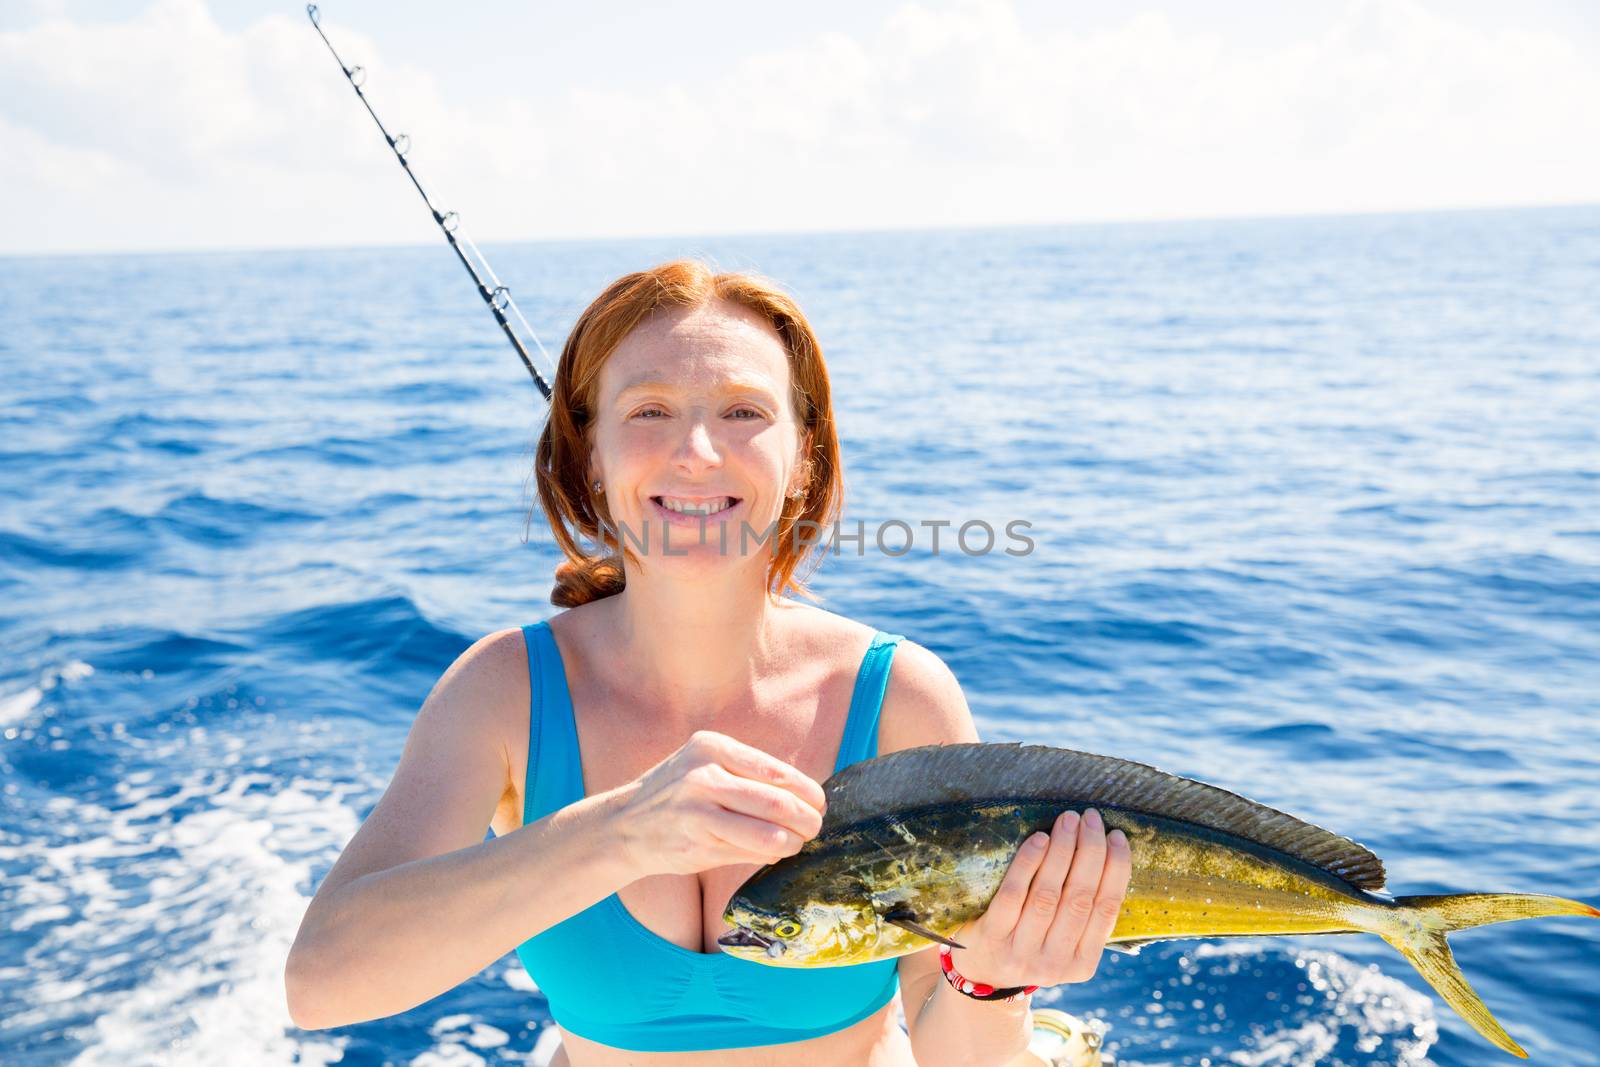 Woman fishing Dorado Mahi-mahi fish happy catch by lunamarina